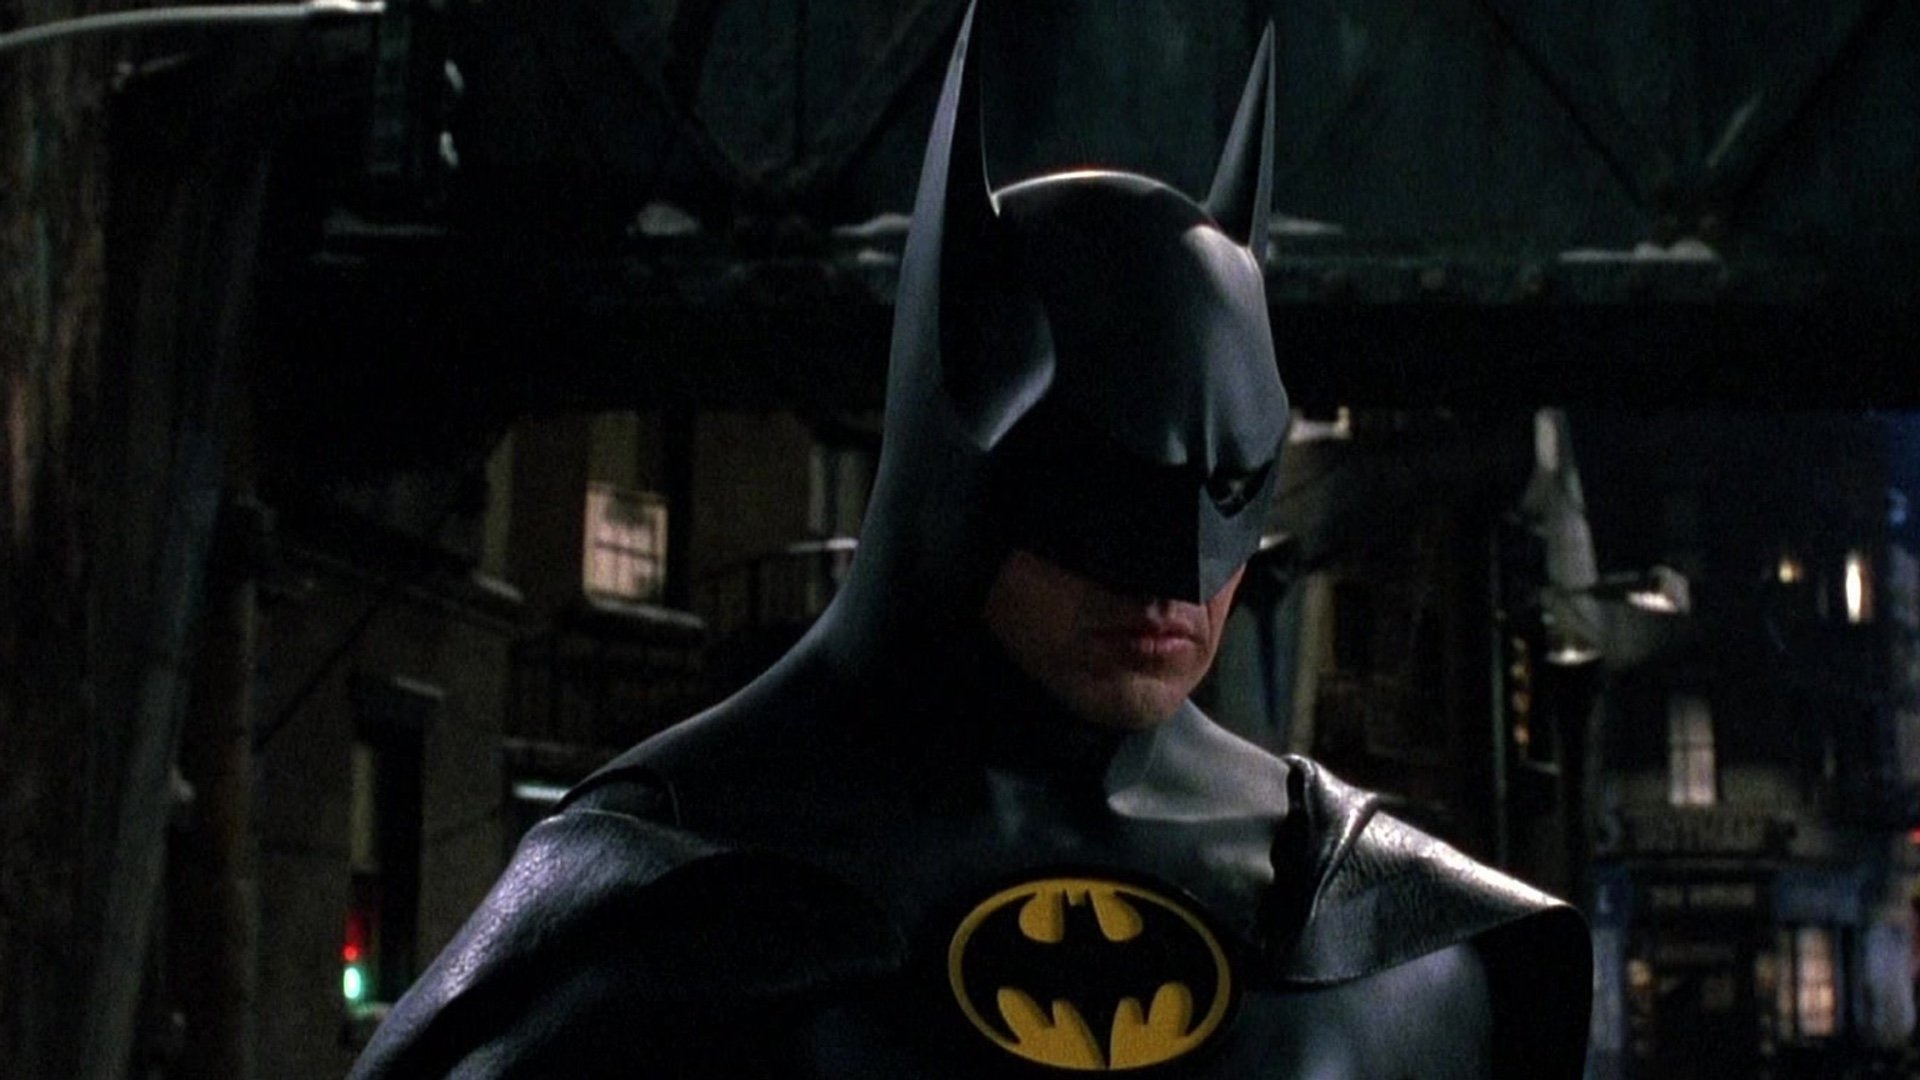 Michael Keaton Teases His Return as Batman in New Photo From BATGIRL Set